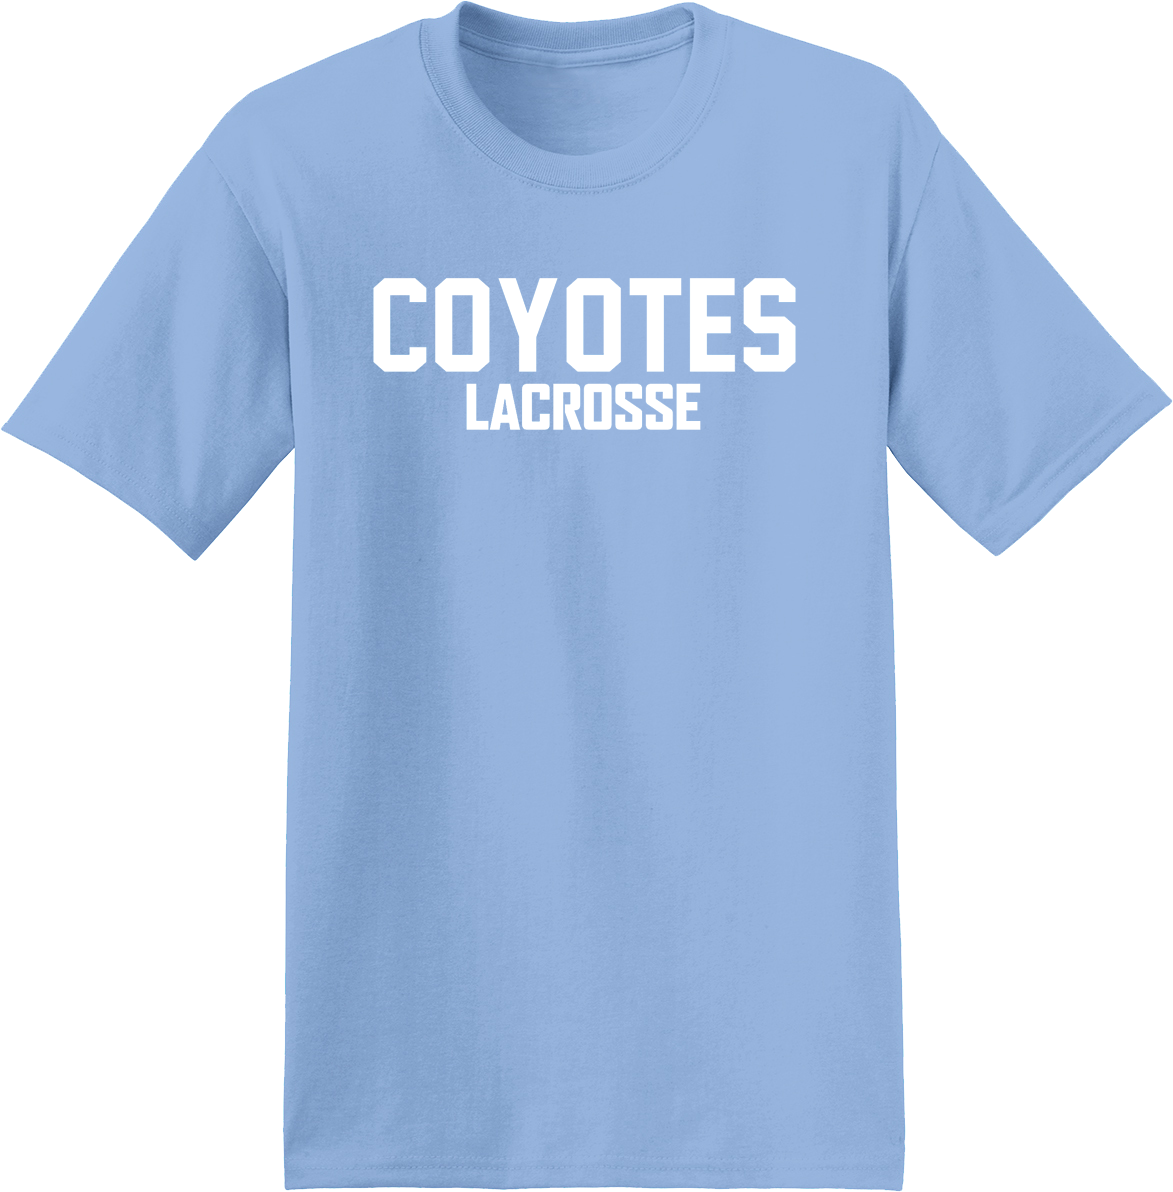 Coyotes Lacrosse Carolina Blue T-Shirt